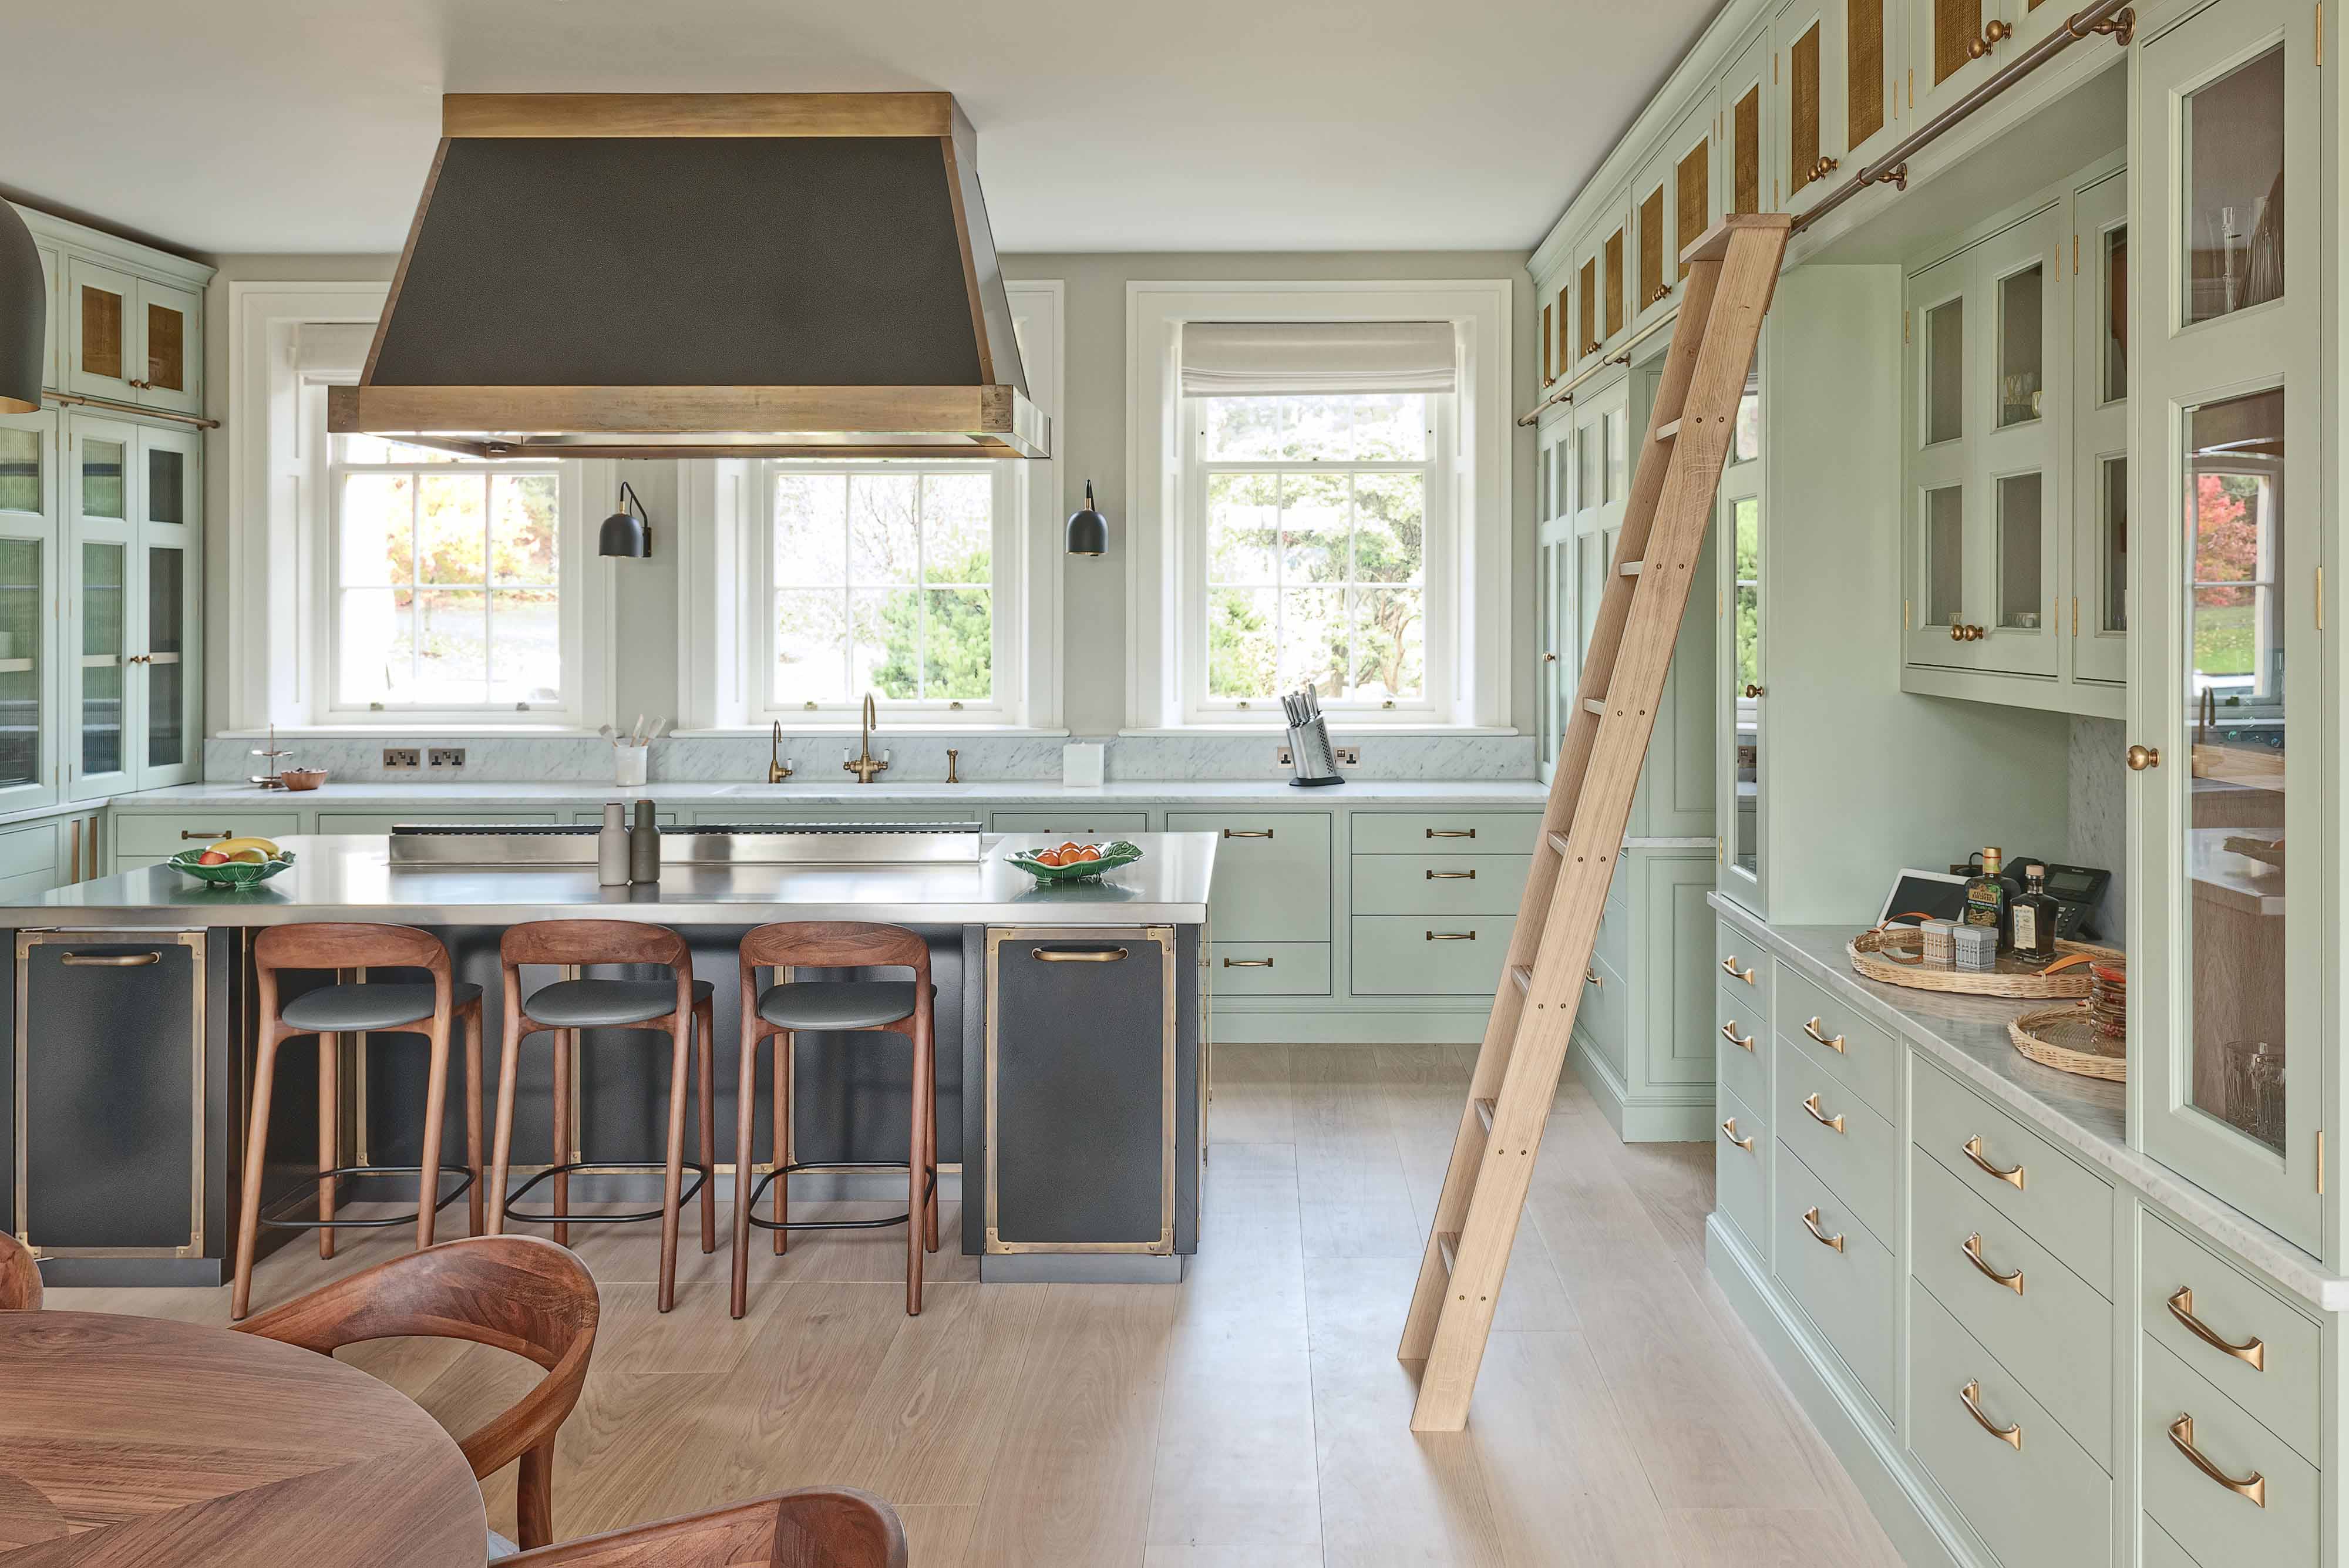 Bespoke kitchen classic luxury weybridge hand painted in mylands greenstone de manincor range cooker